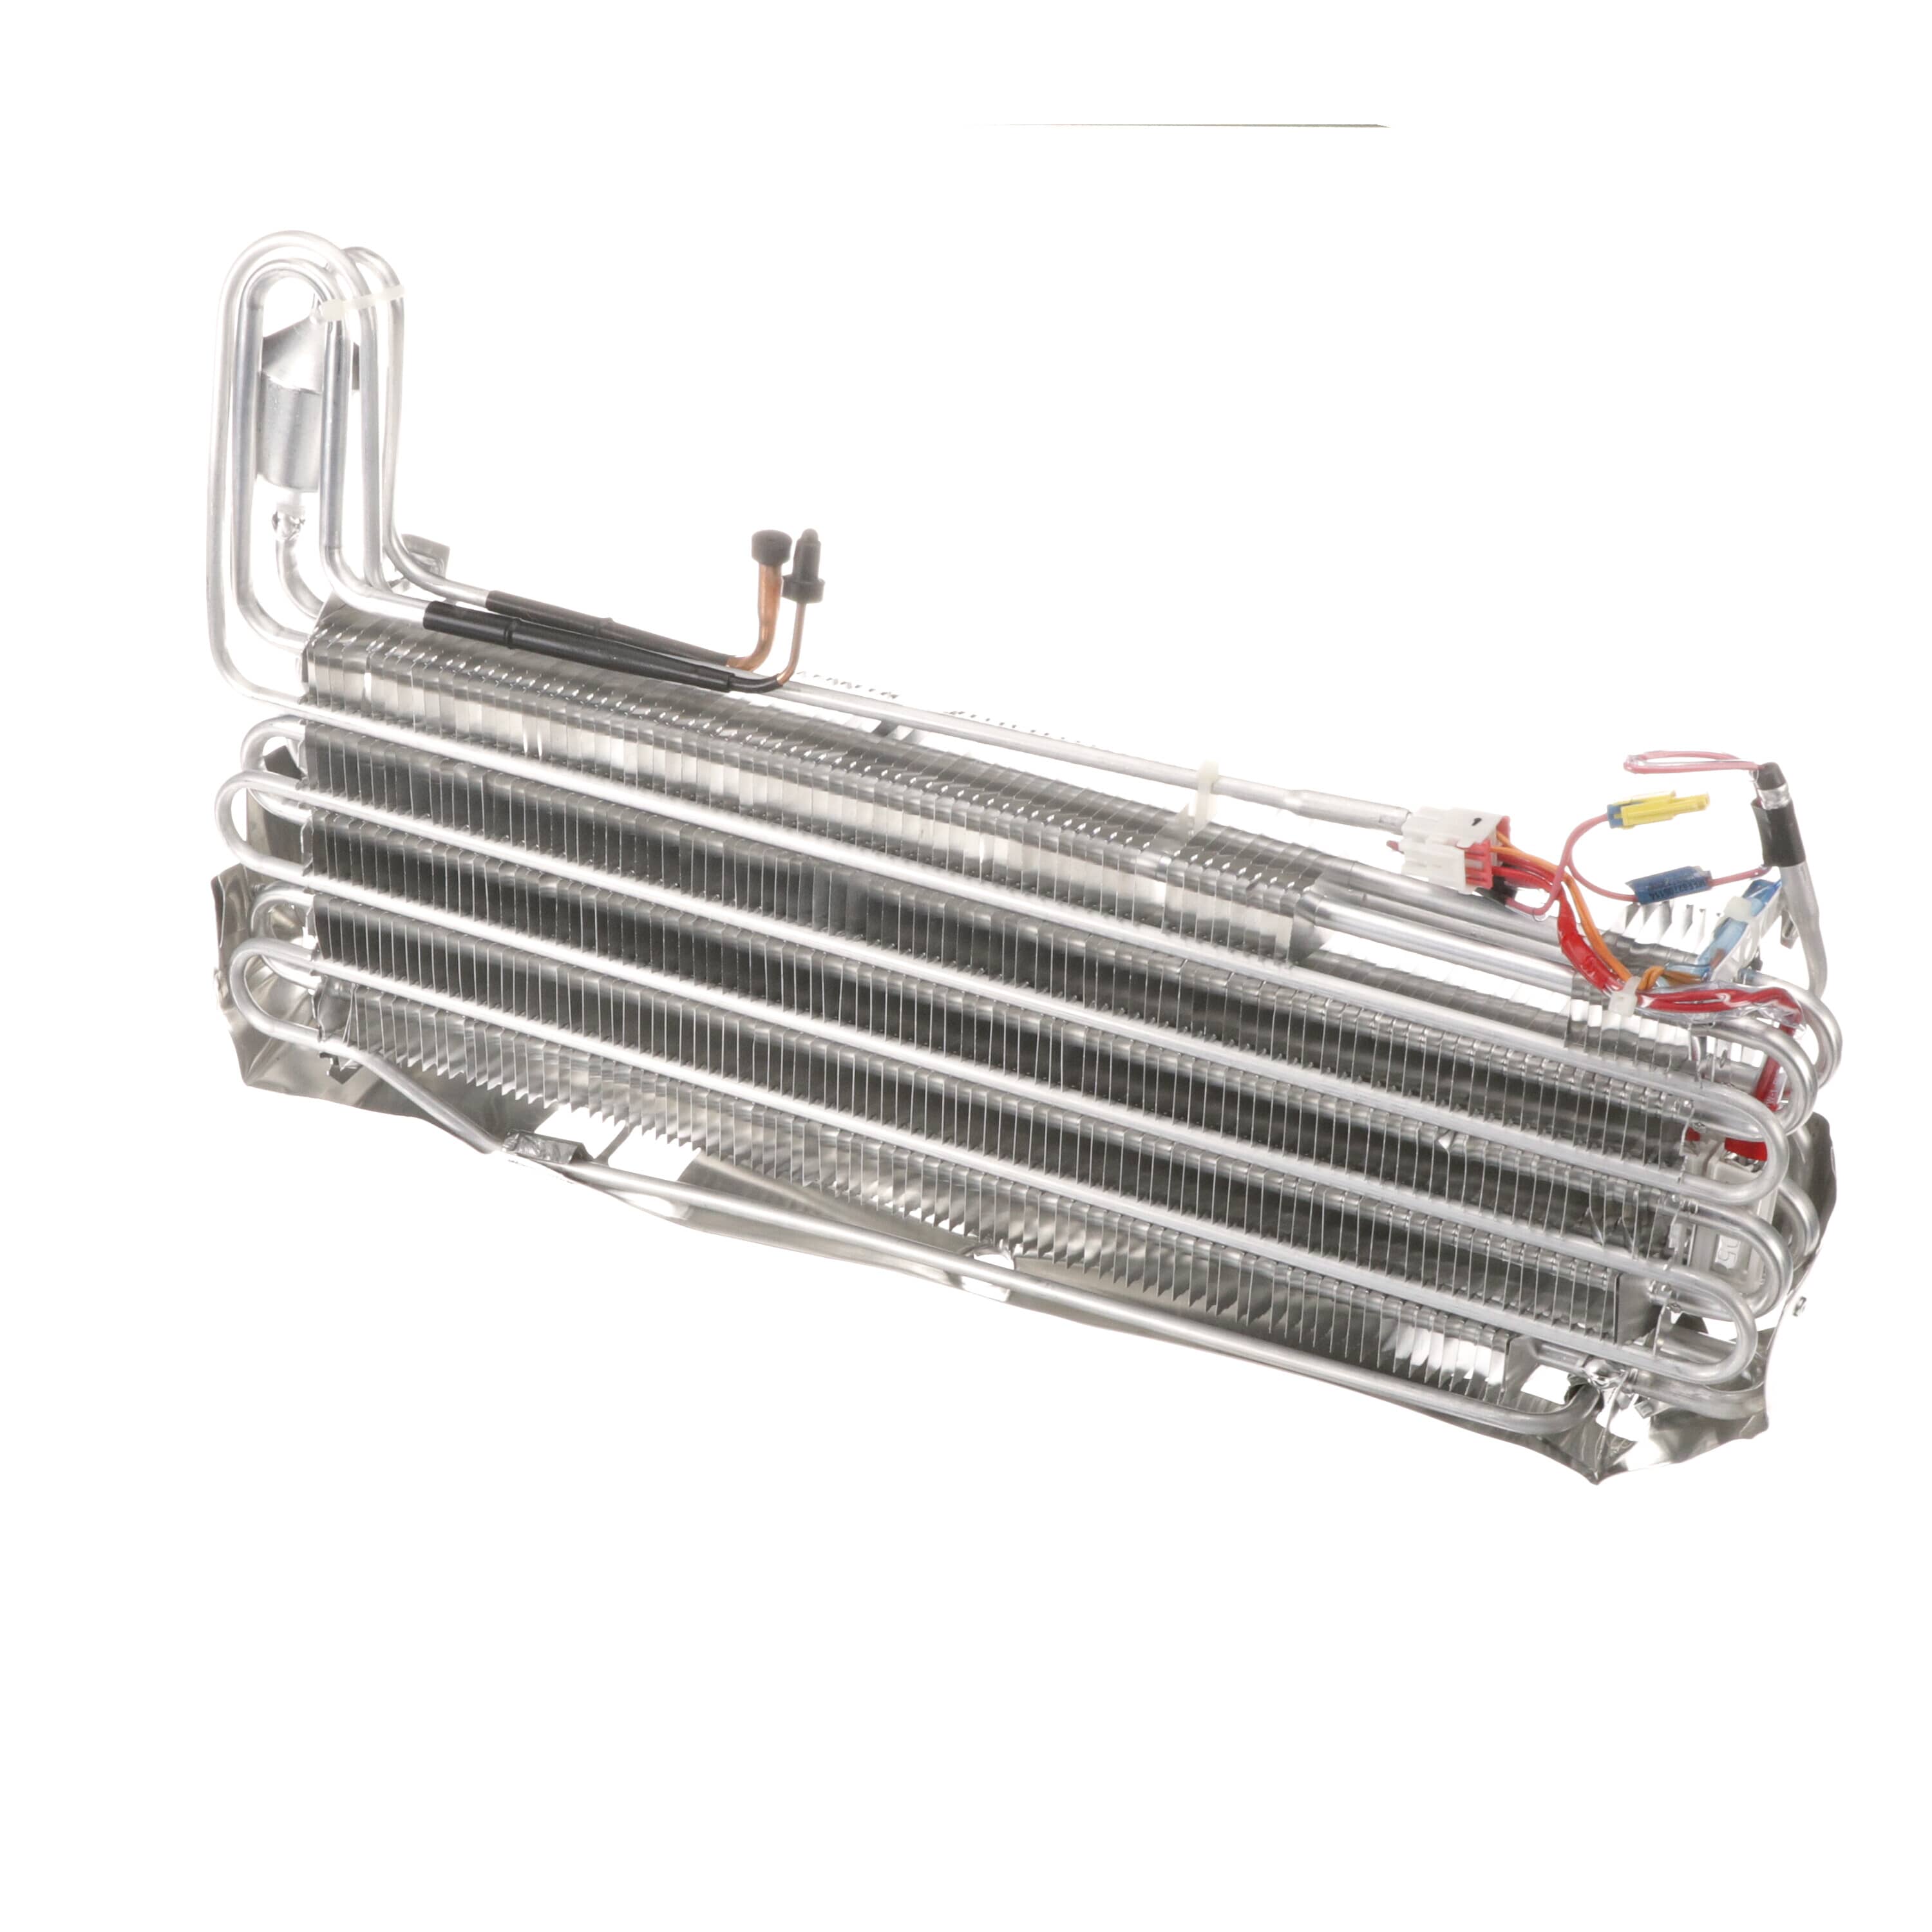 LG ADL73341415 Evaporator Assembly